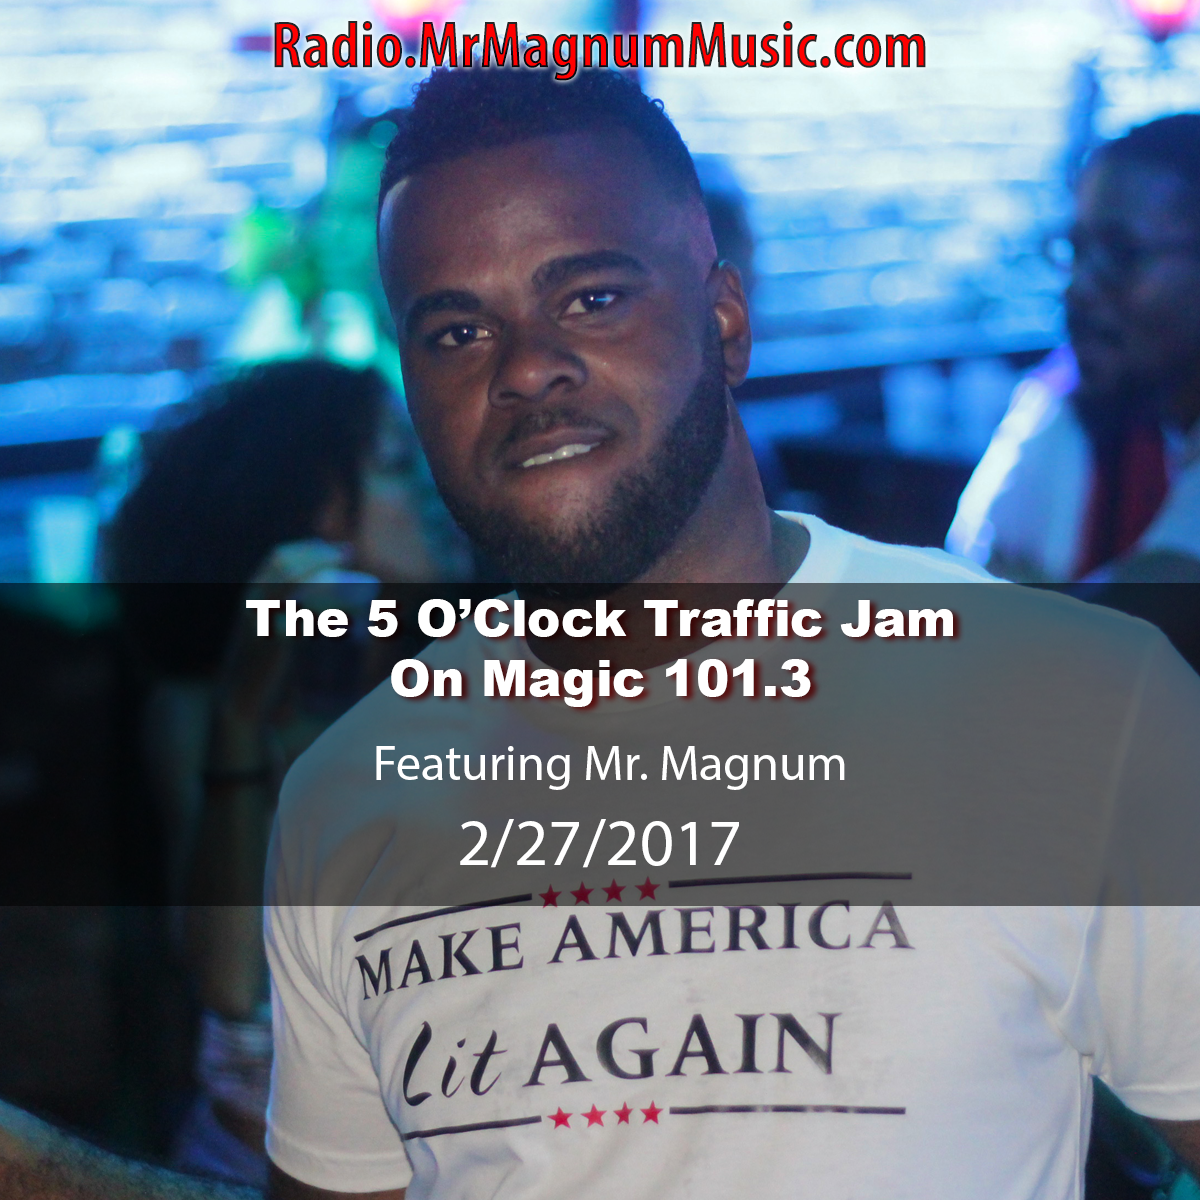 The 5 O'Clock Traffic Jam with Mr. Magnum